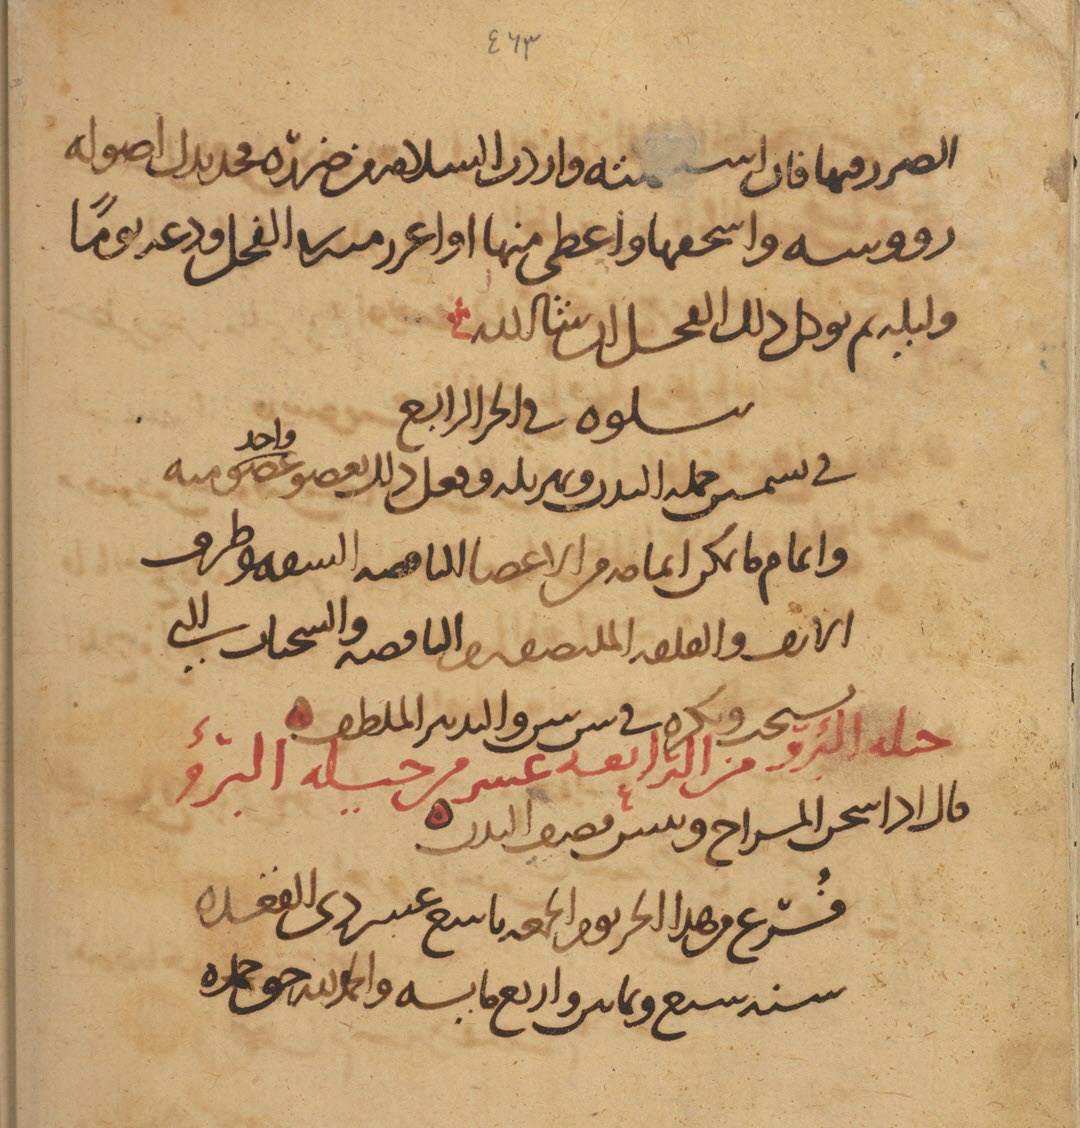 An image of the Arabic manuscript Kitāb al-Ḥāwī fī al-ṭibb (The comprehensive book on medicine) by Abū Bakr Muhammad al-Rāzī (865-925).